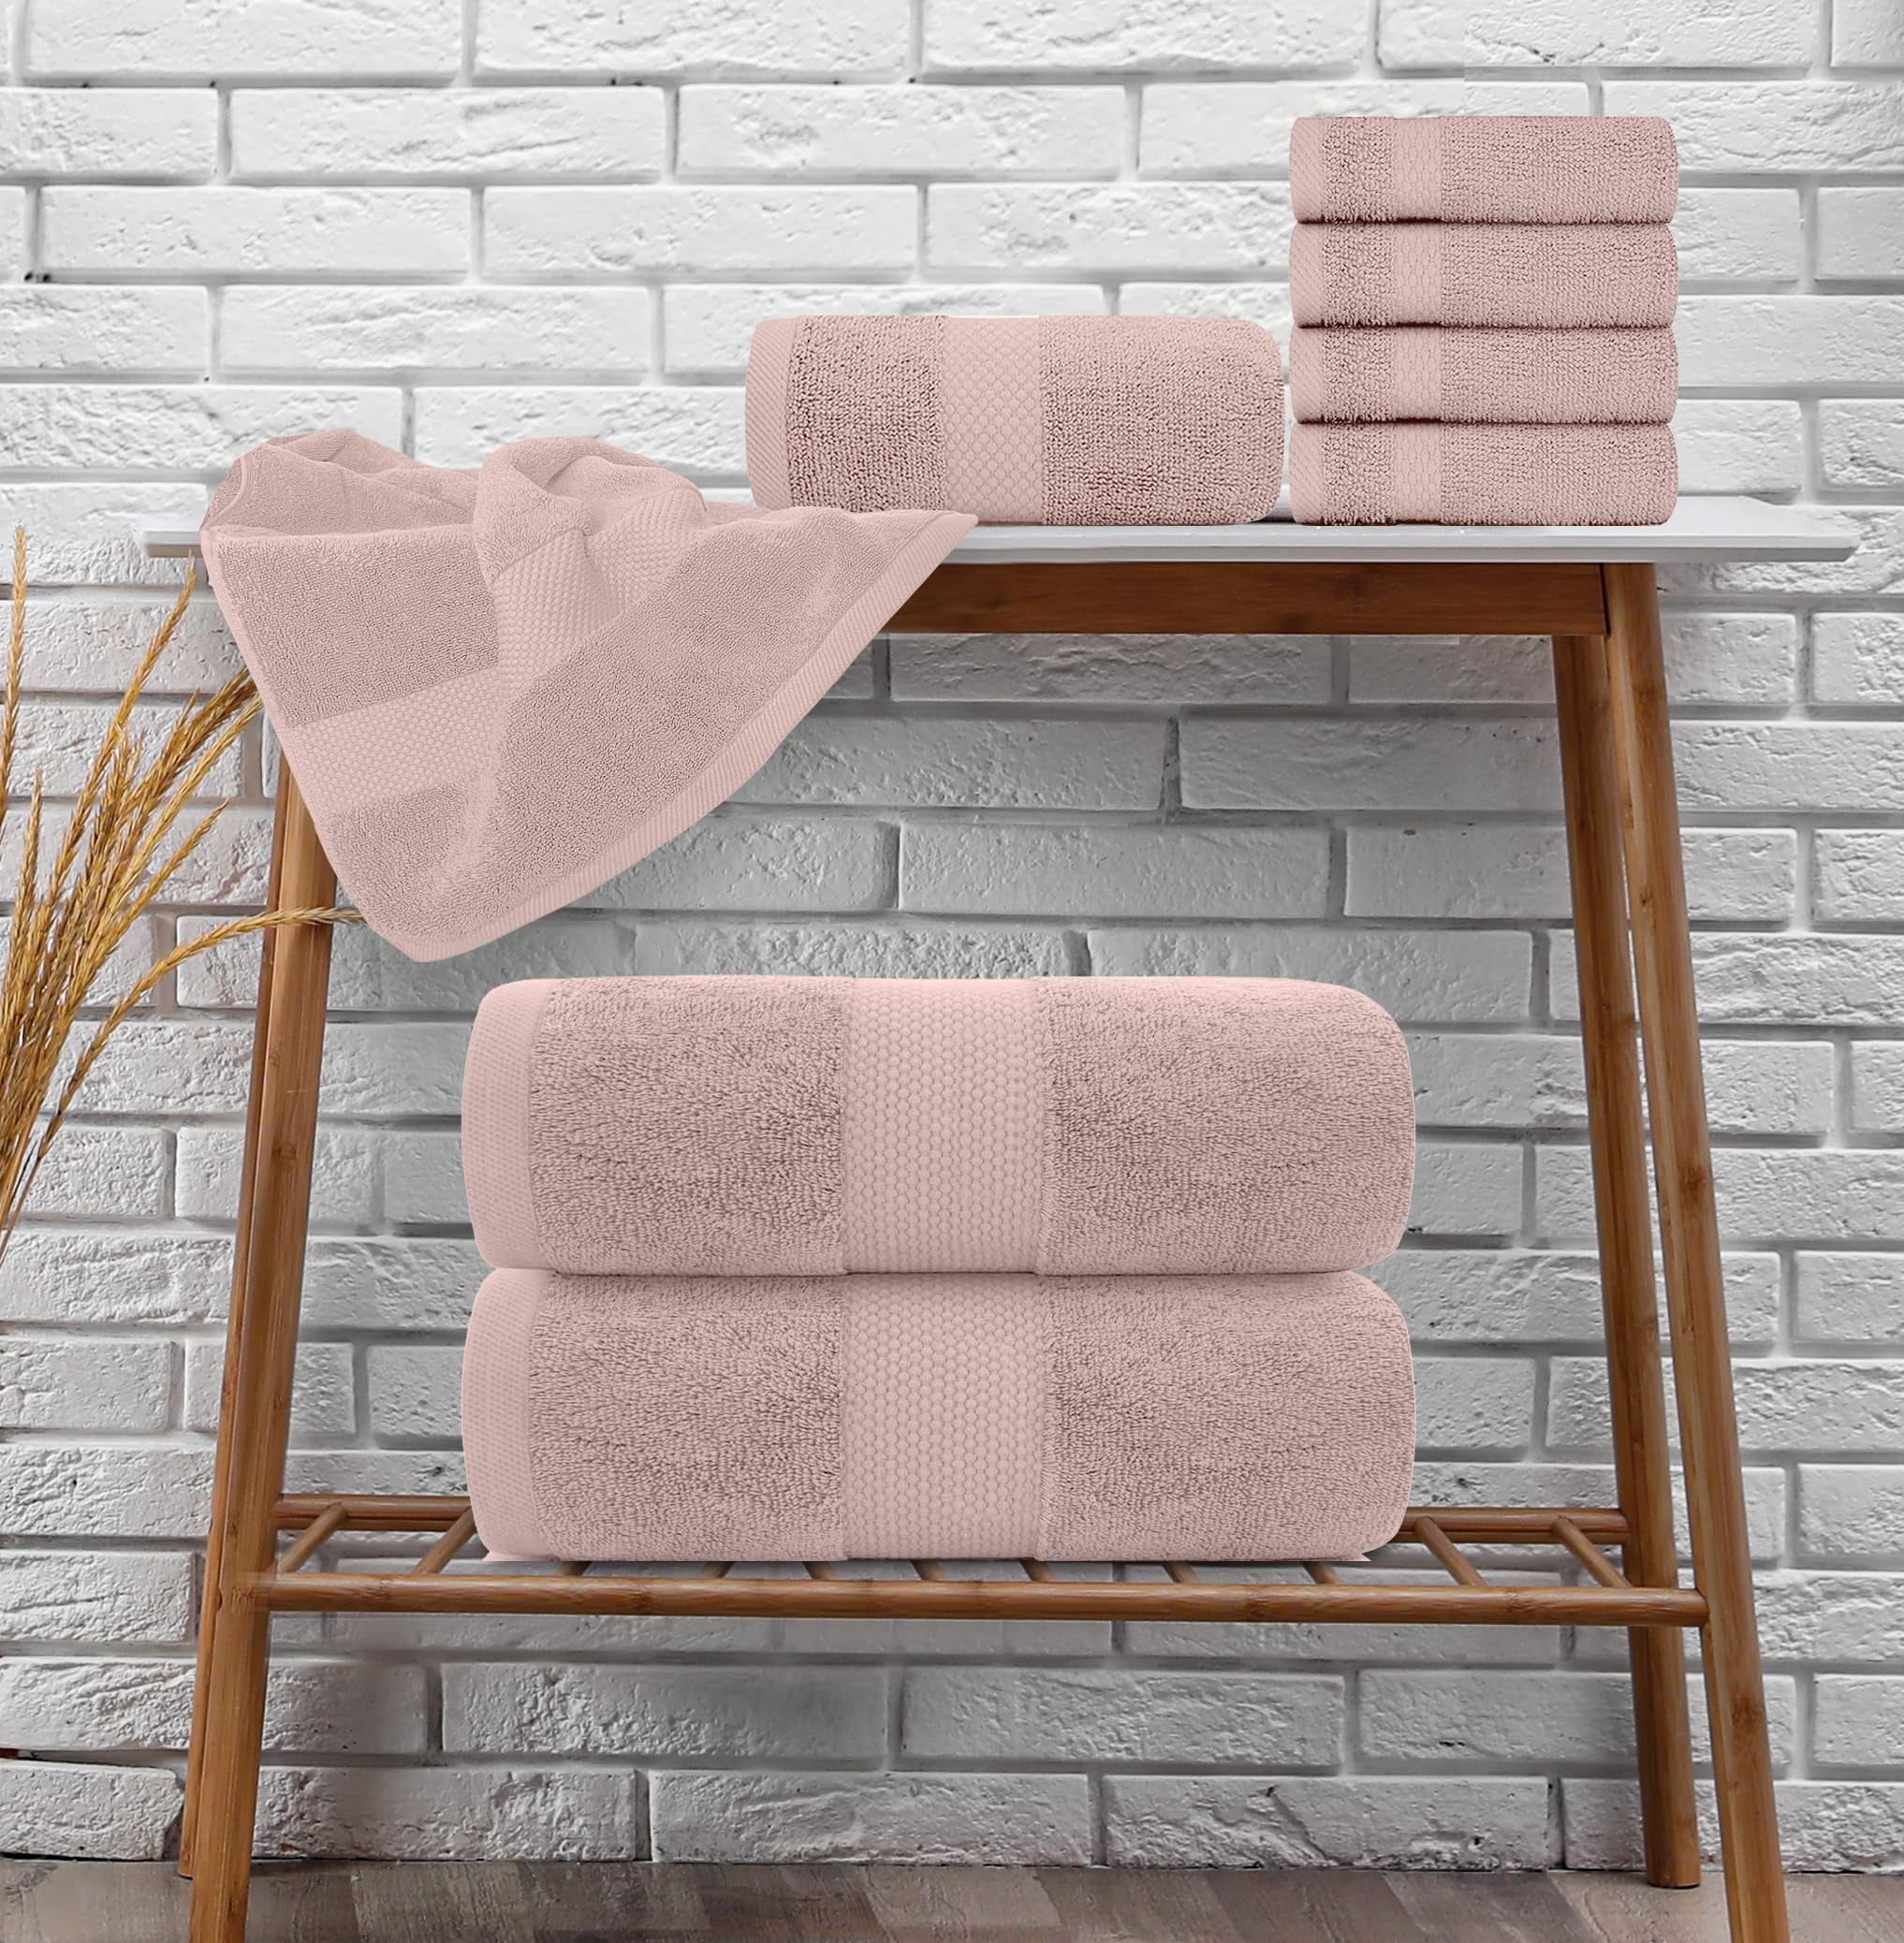 White Classic Luxury White Bath Towel Set - Hotel Soft Cotton 2/Bath 2/Hand  4/Wash - 8 Piece 